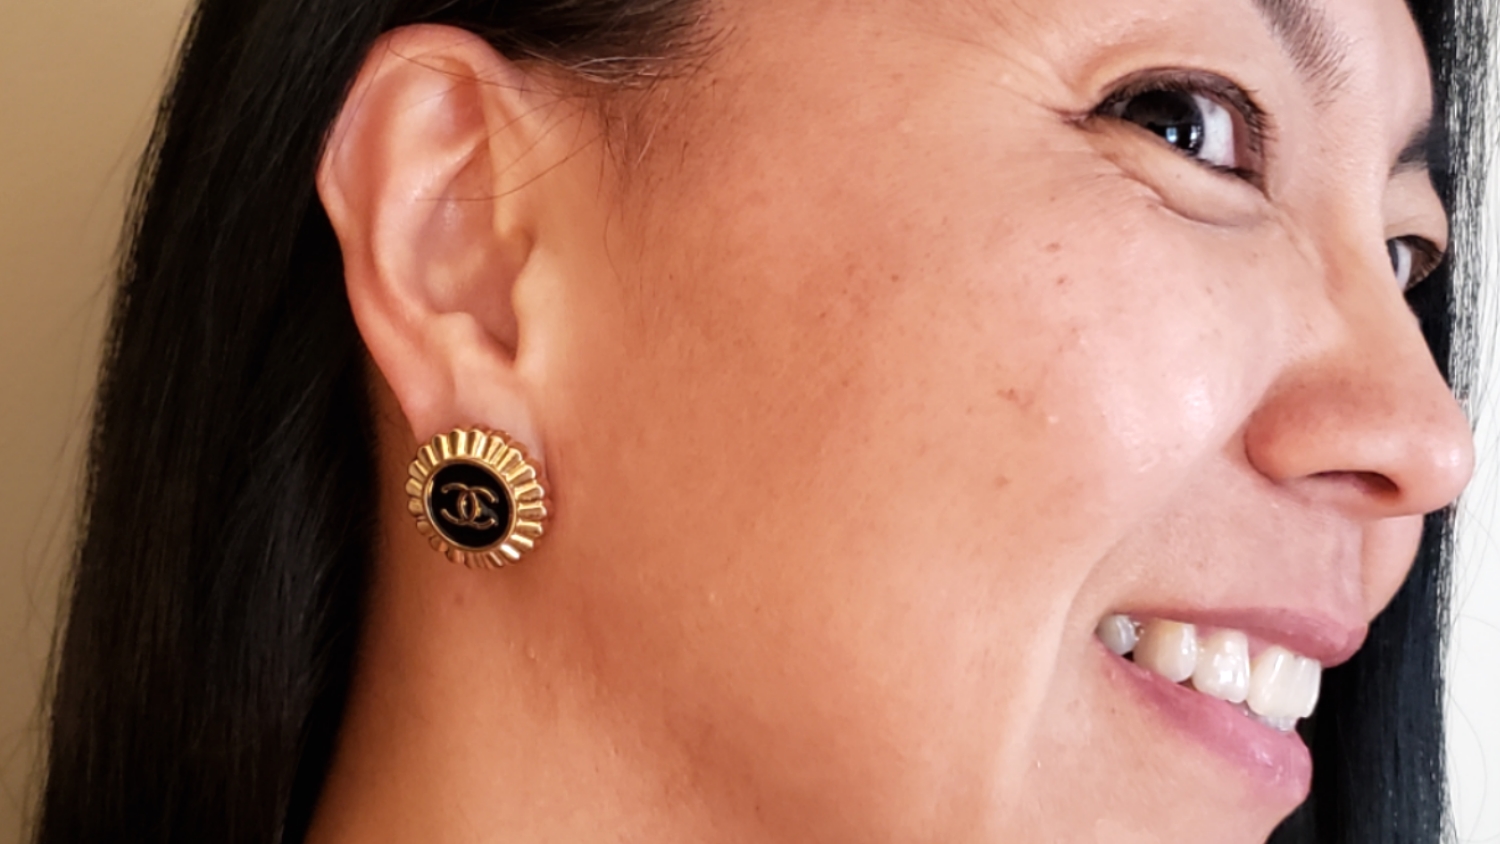 chanel earrings for women cc logo studs sil